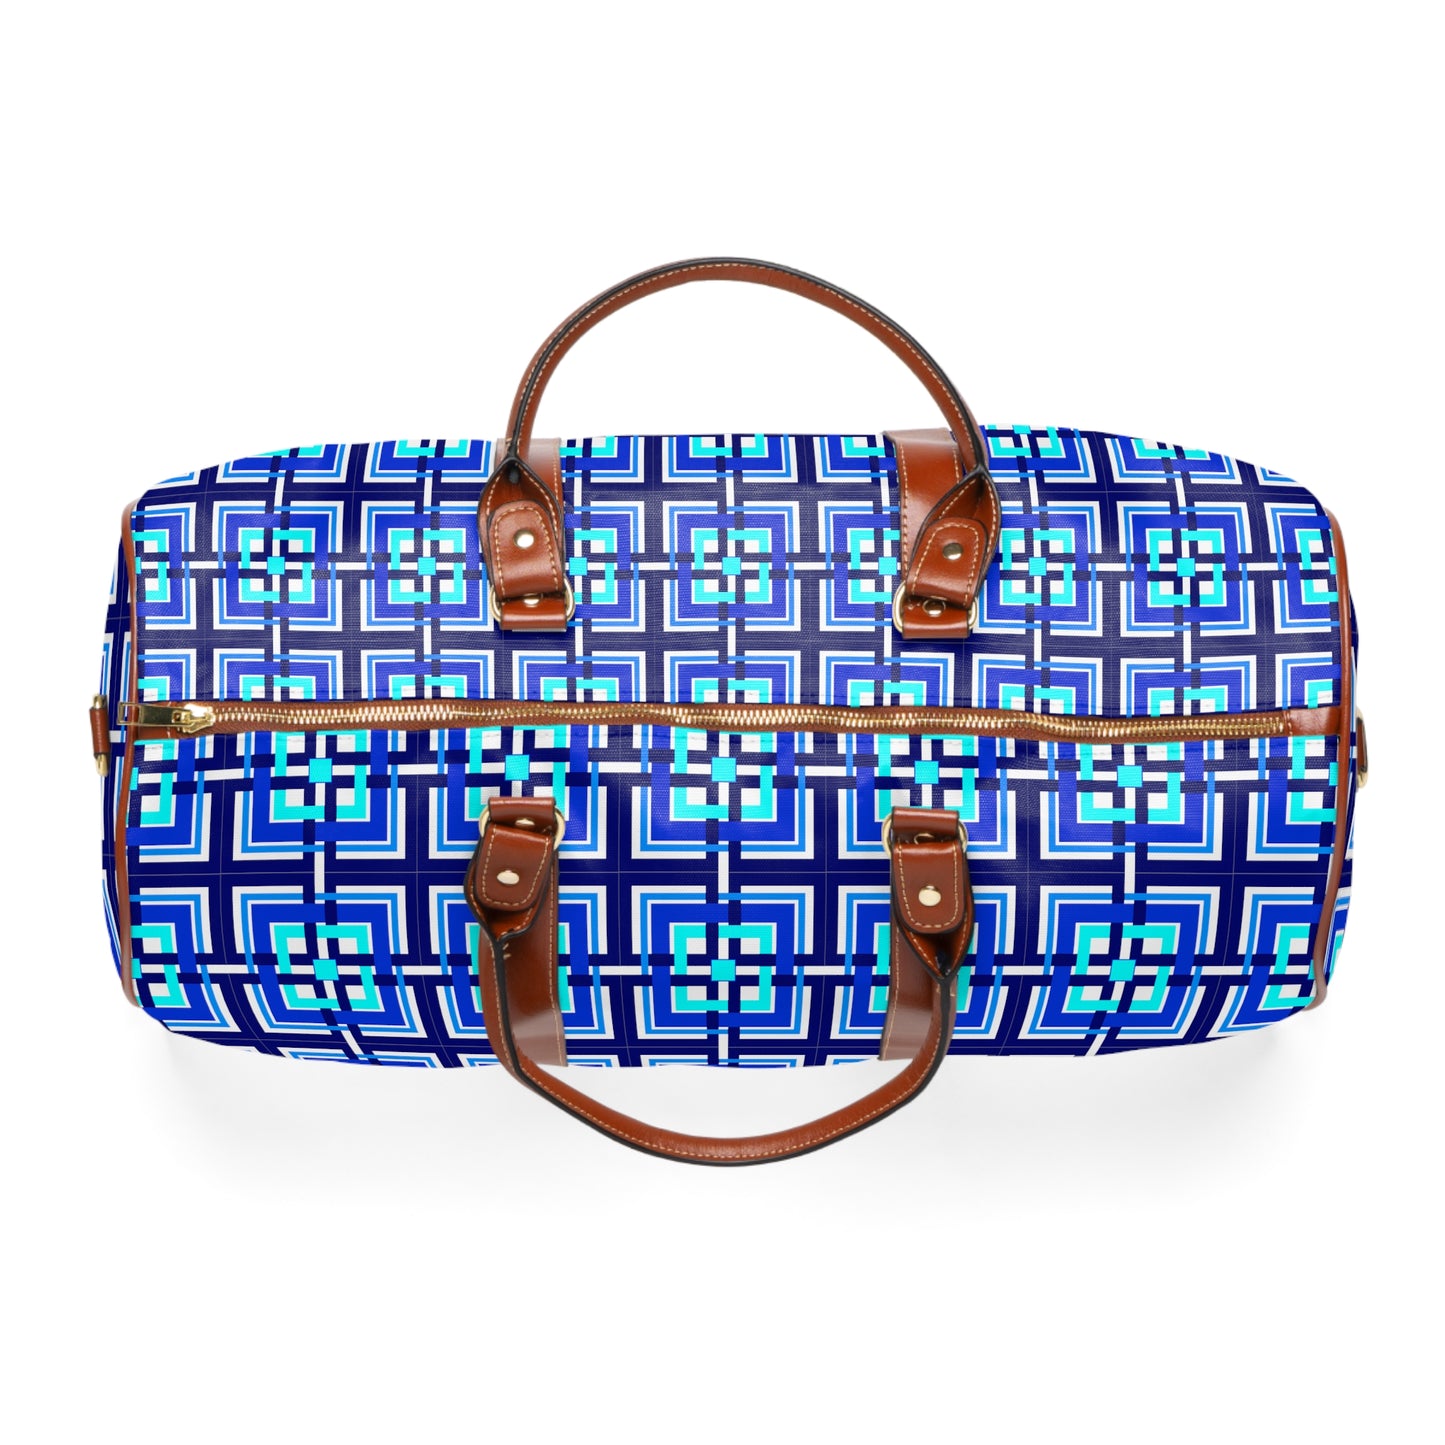 Intersecting Squares - Blue - White ffffff - Waterproof Travel Bag